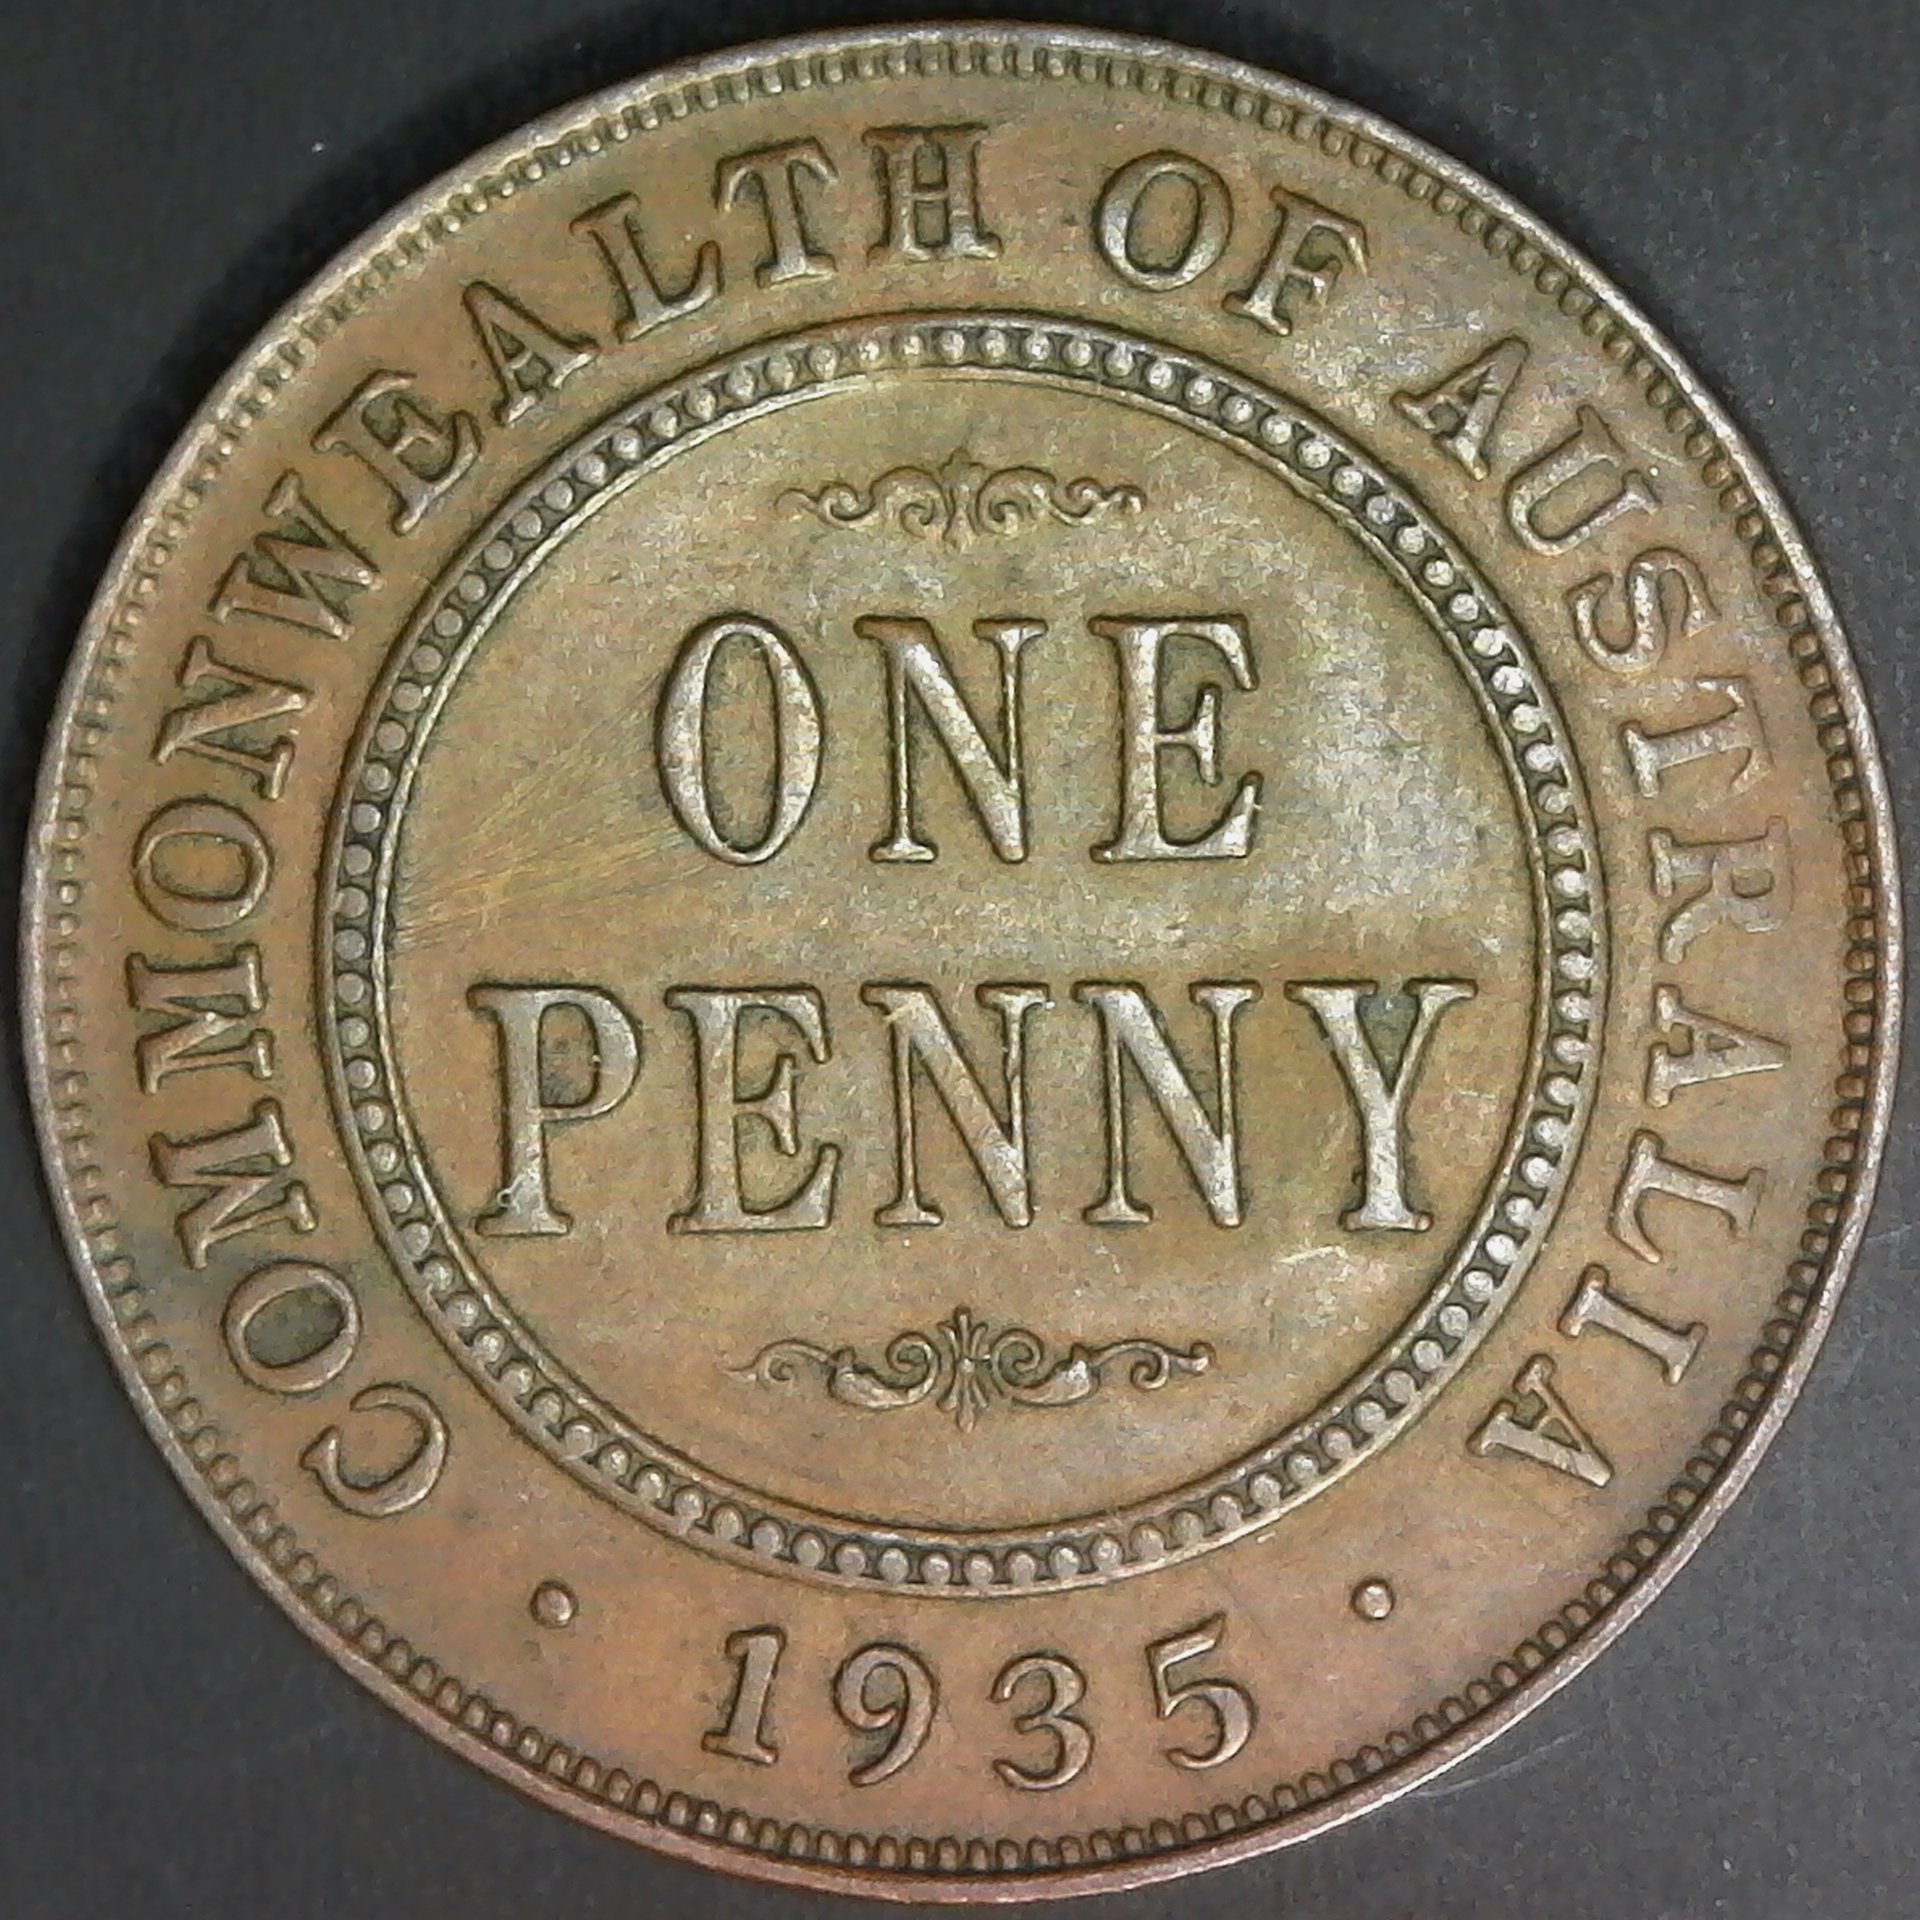 Australia One Penny 1935 rev.jpg